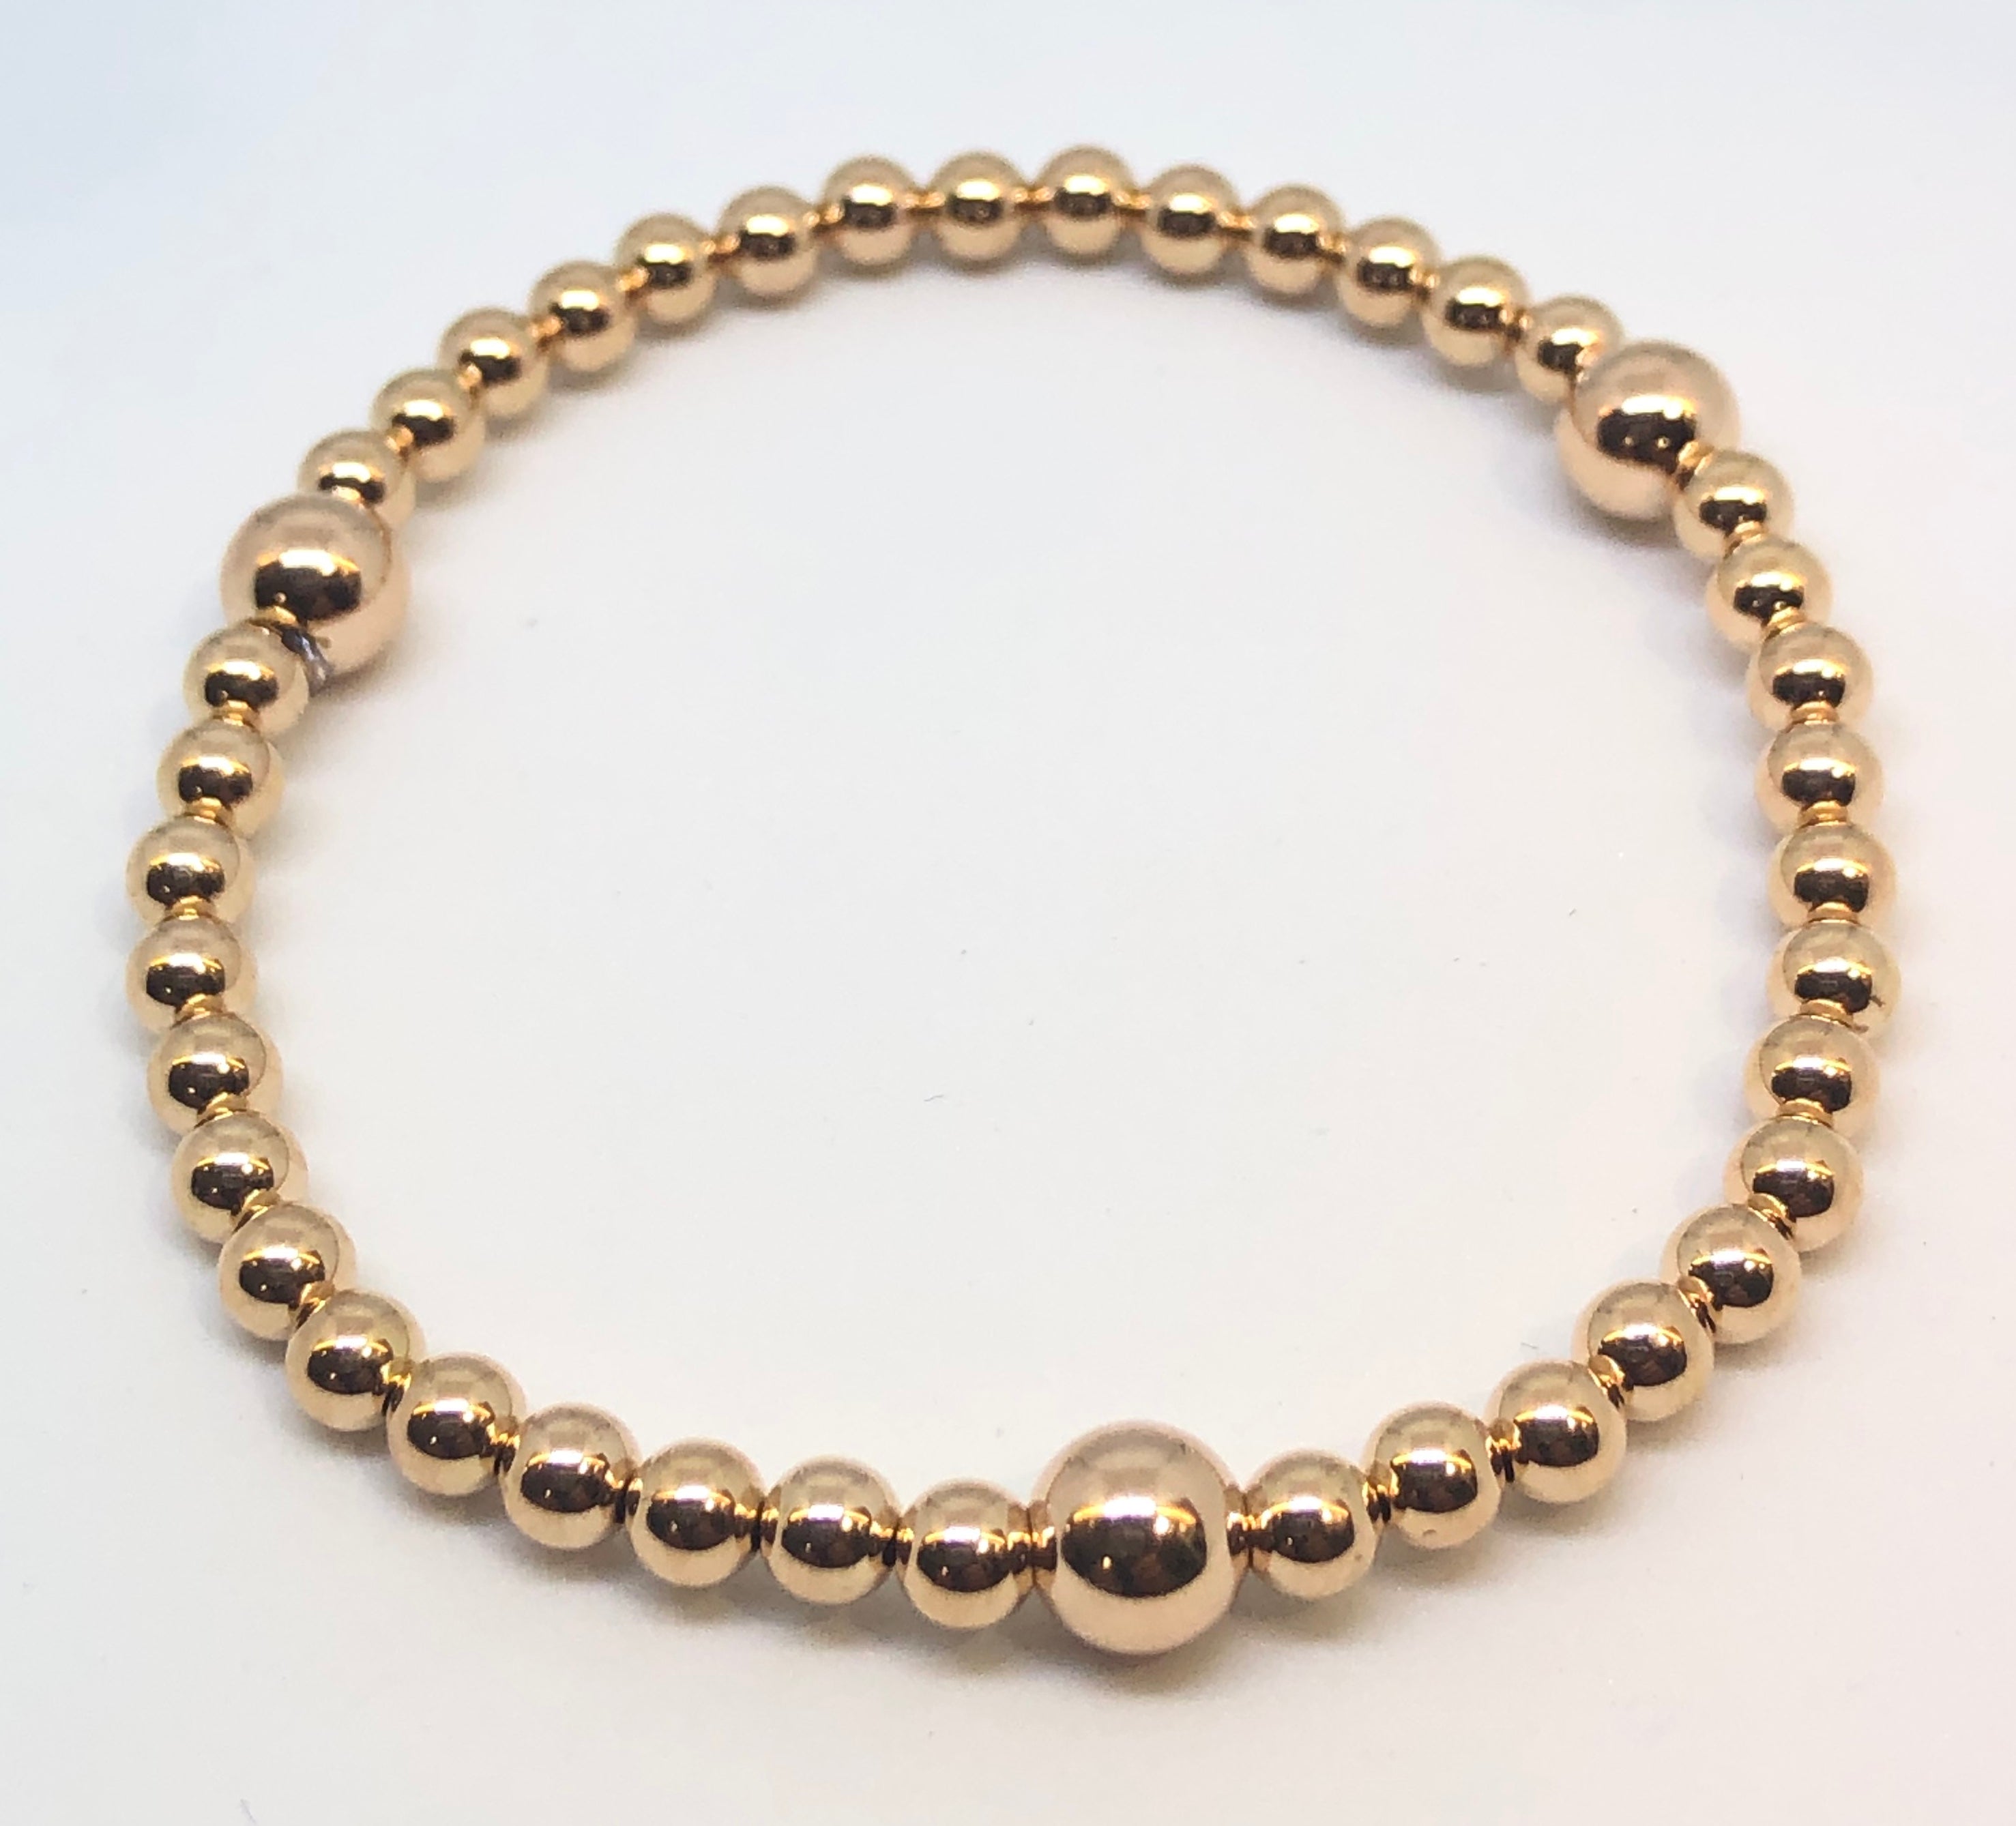 4mm Rose Gold Filled Bracelet with 3 6mm Rose Gold Beads